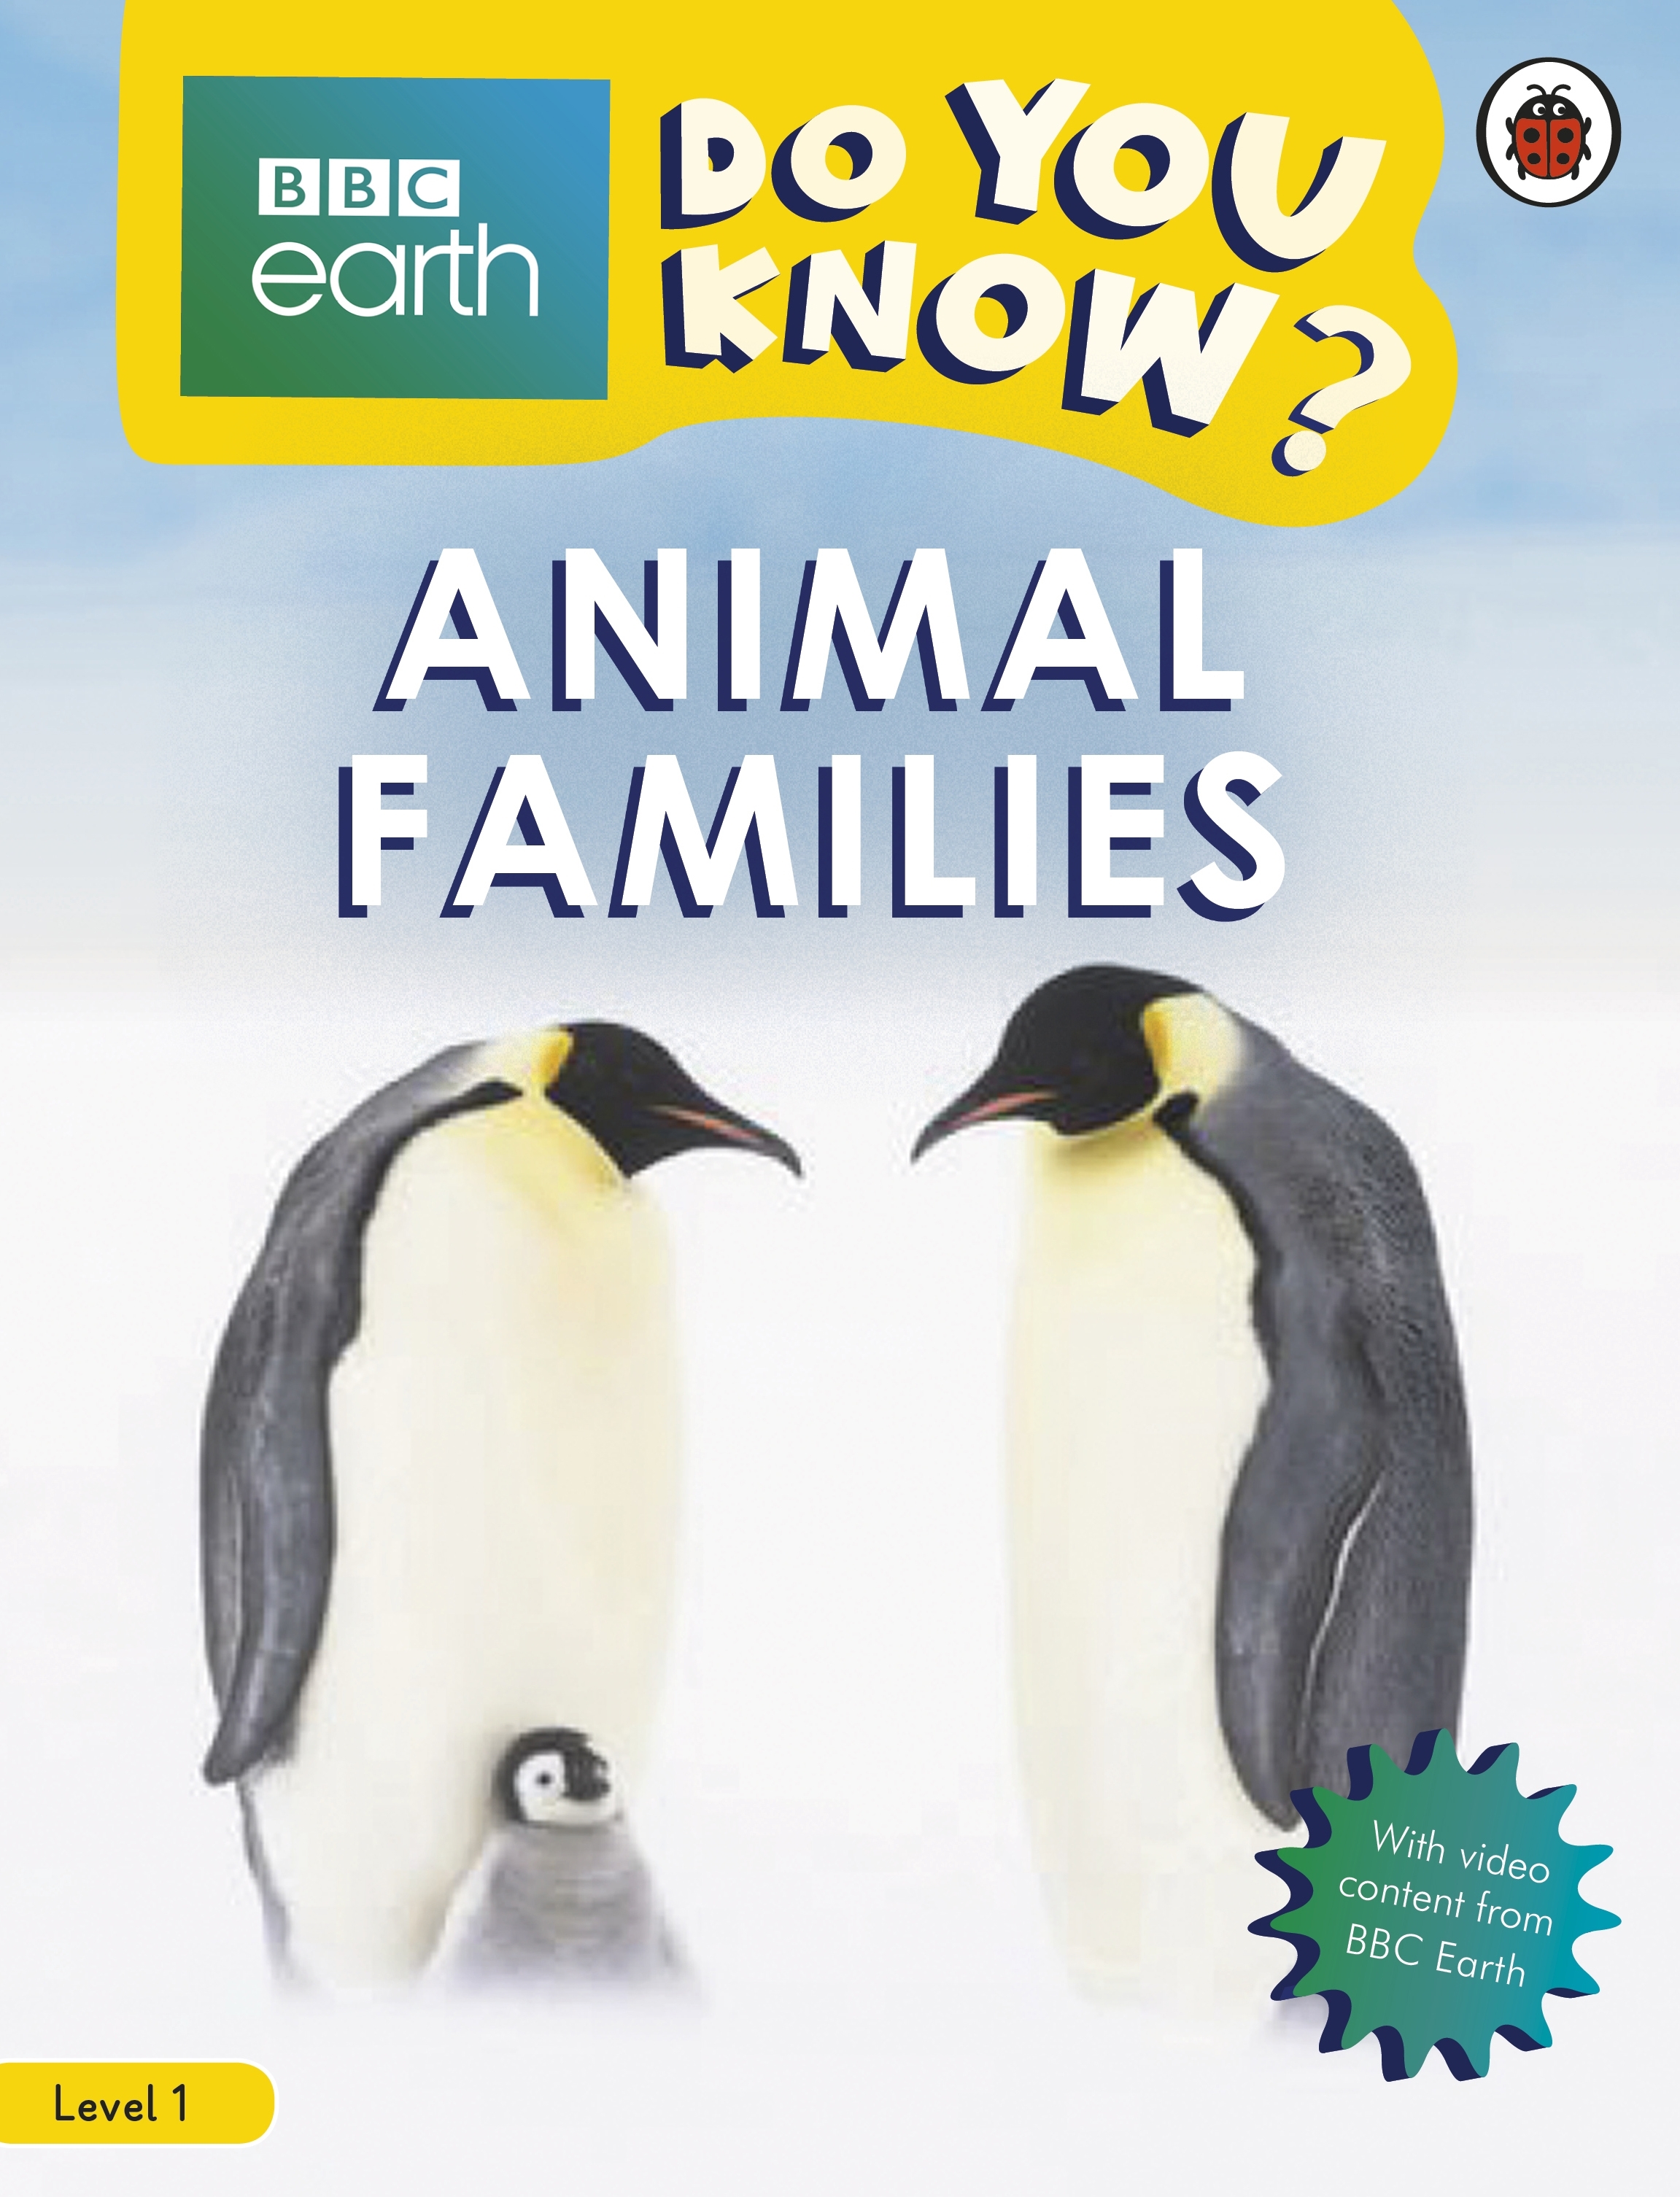 Do You Know? Level 1 – BBC Earth Animal Families - Penguin Books Australia